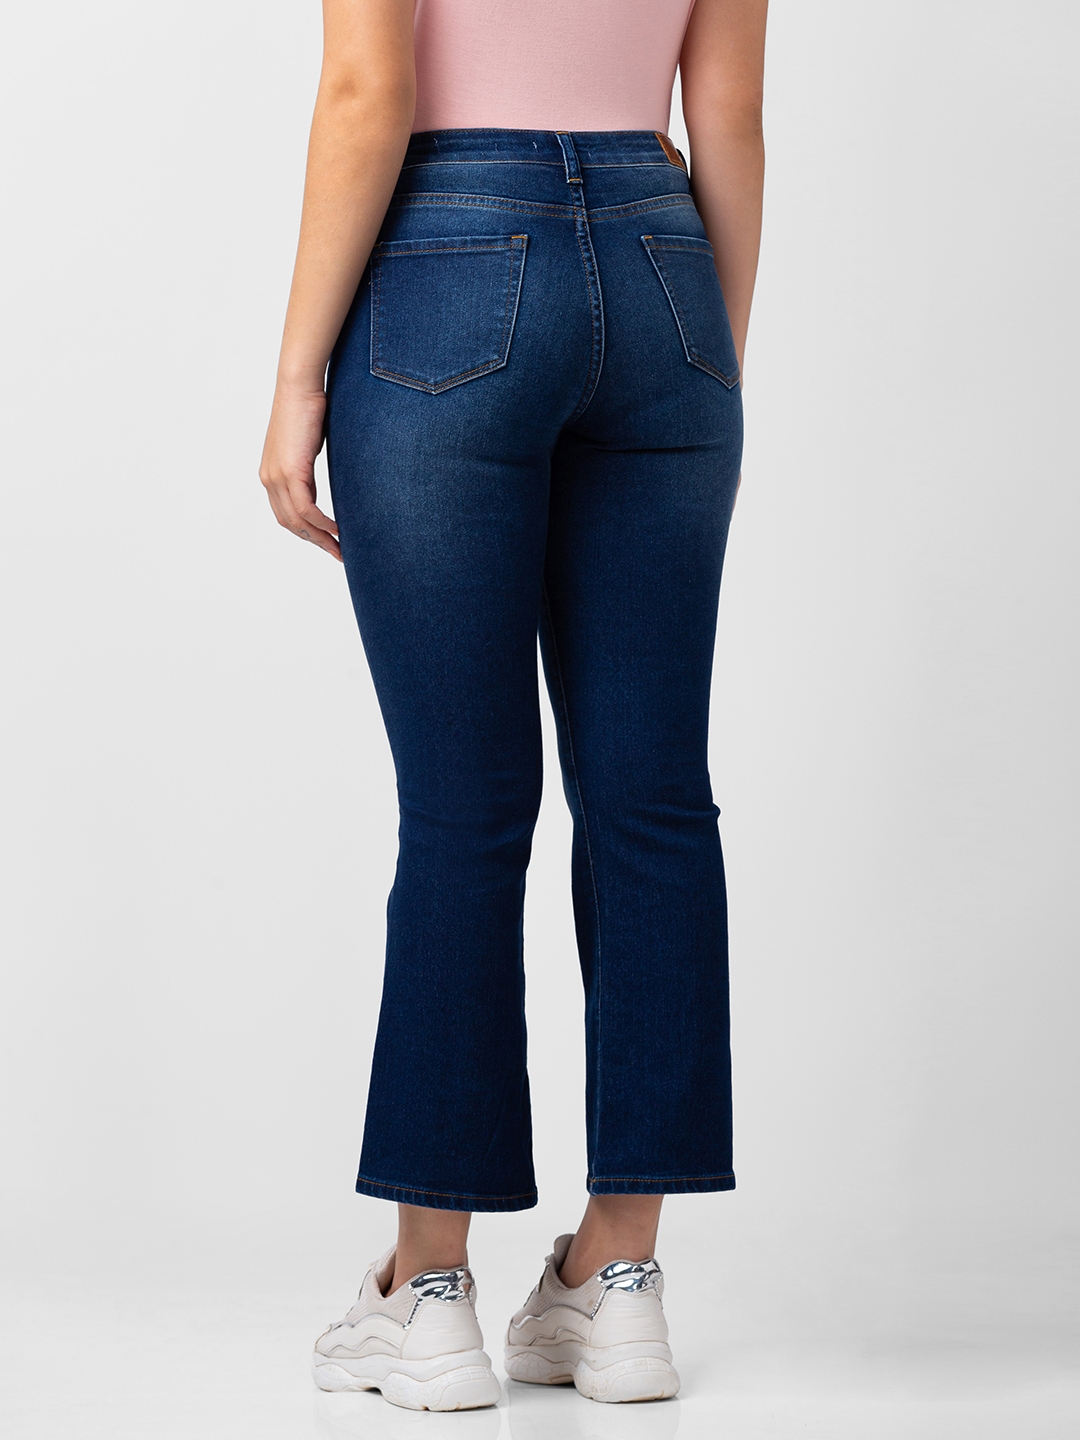 Buy SPYKAR Solid Lycra Skinny Fit High Rise Women's Jeans